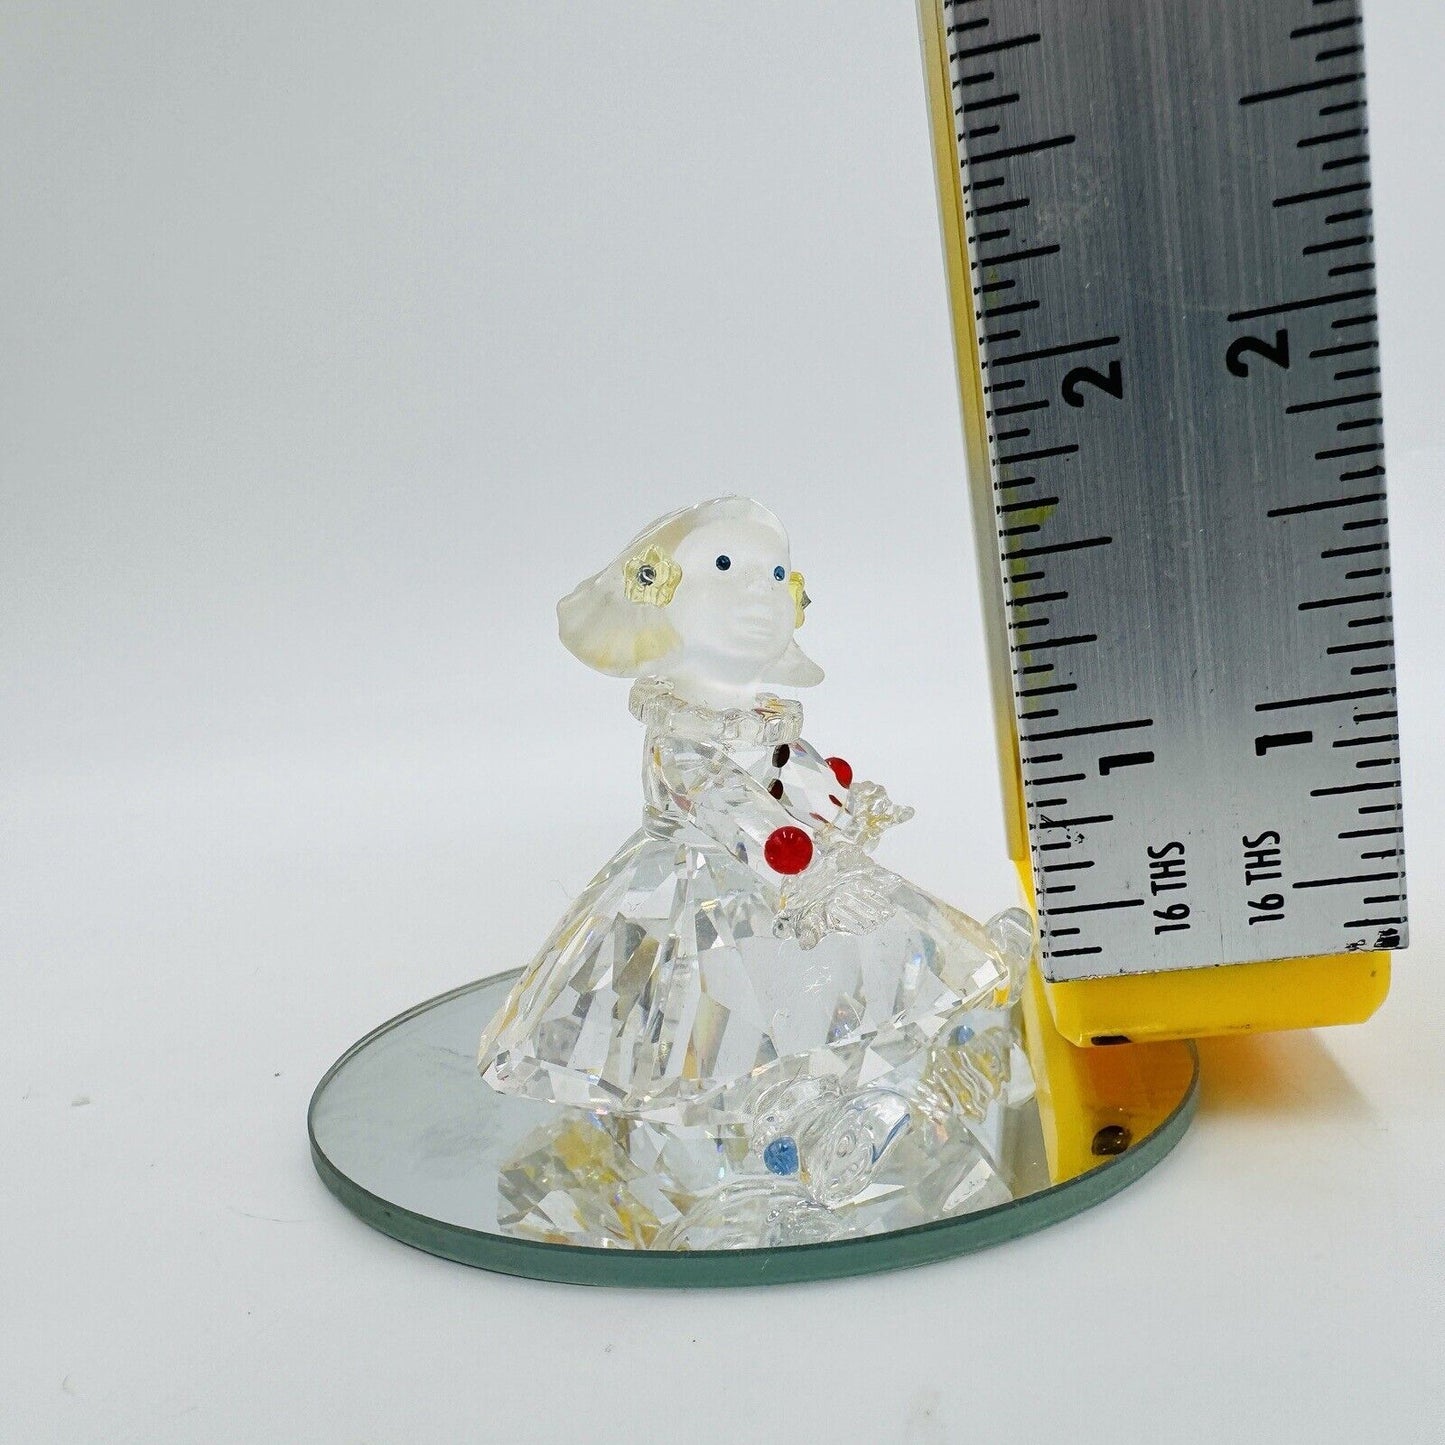 SWAROVSKI Crystal Cheerful Times Figurine Doll 626247 Austria Retired